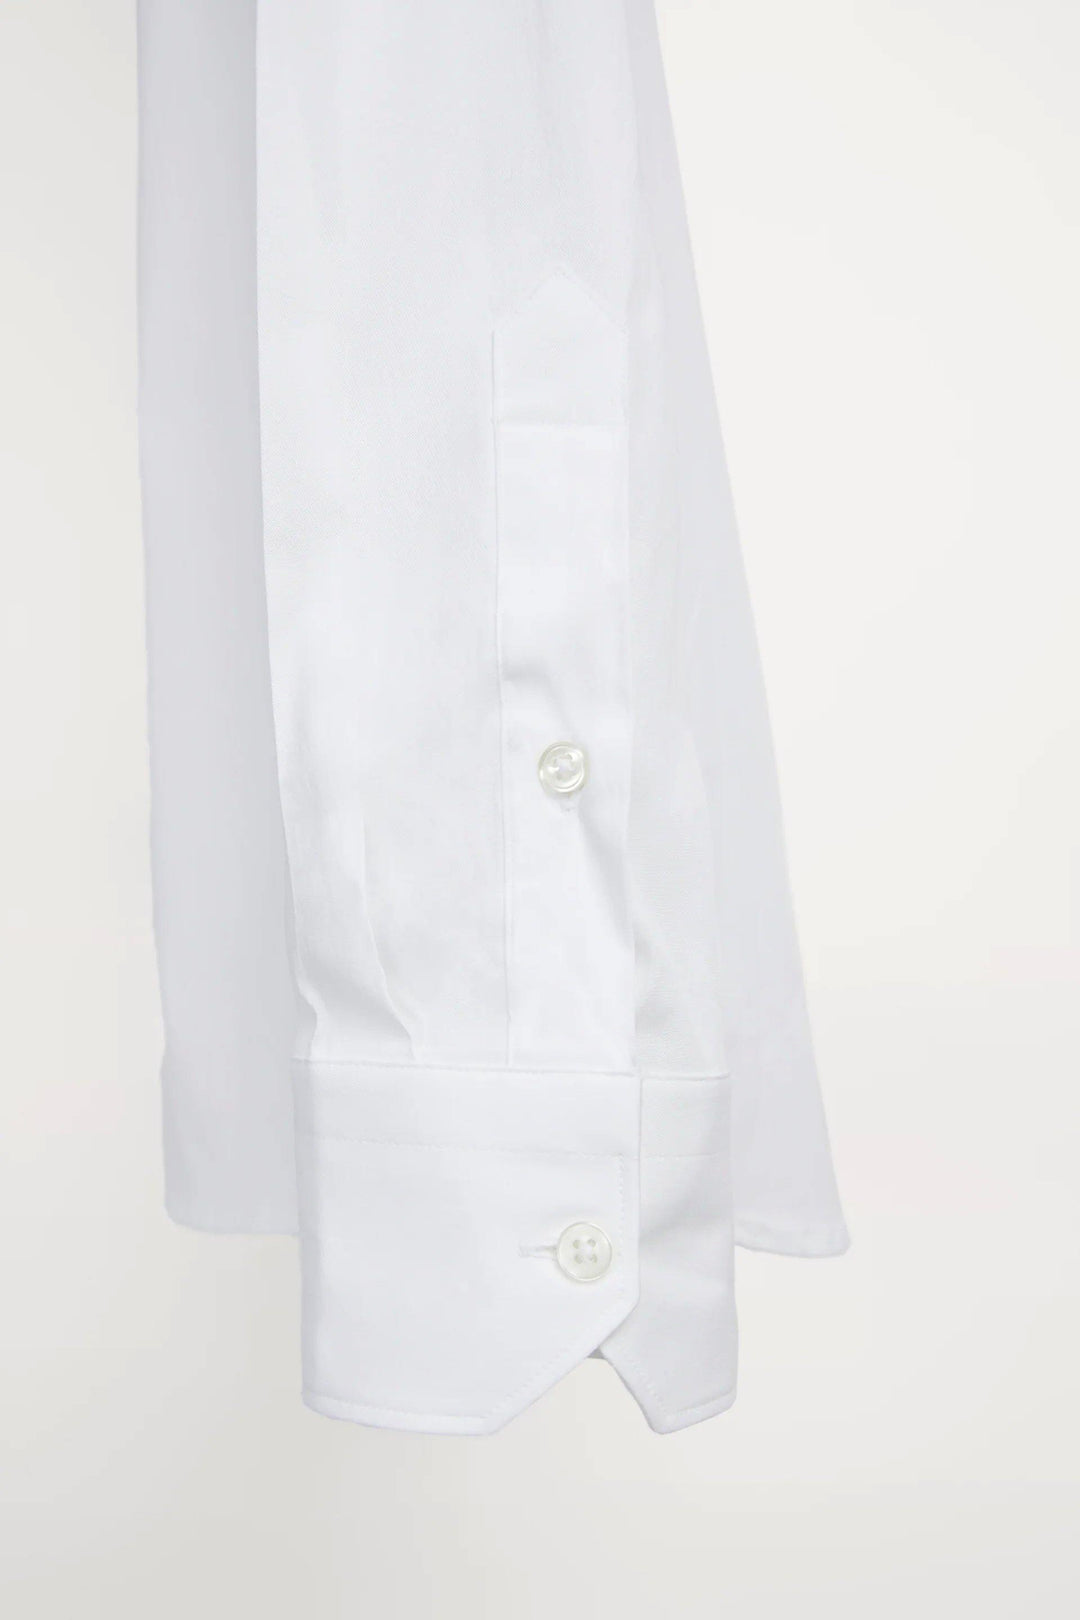 ZaraMan Casual L/S Plain Shirt 3894/401/250